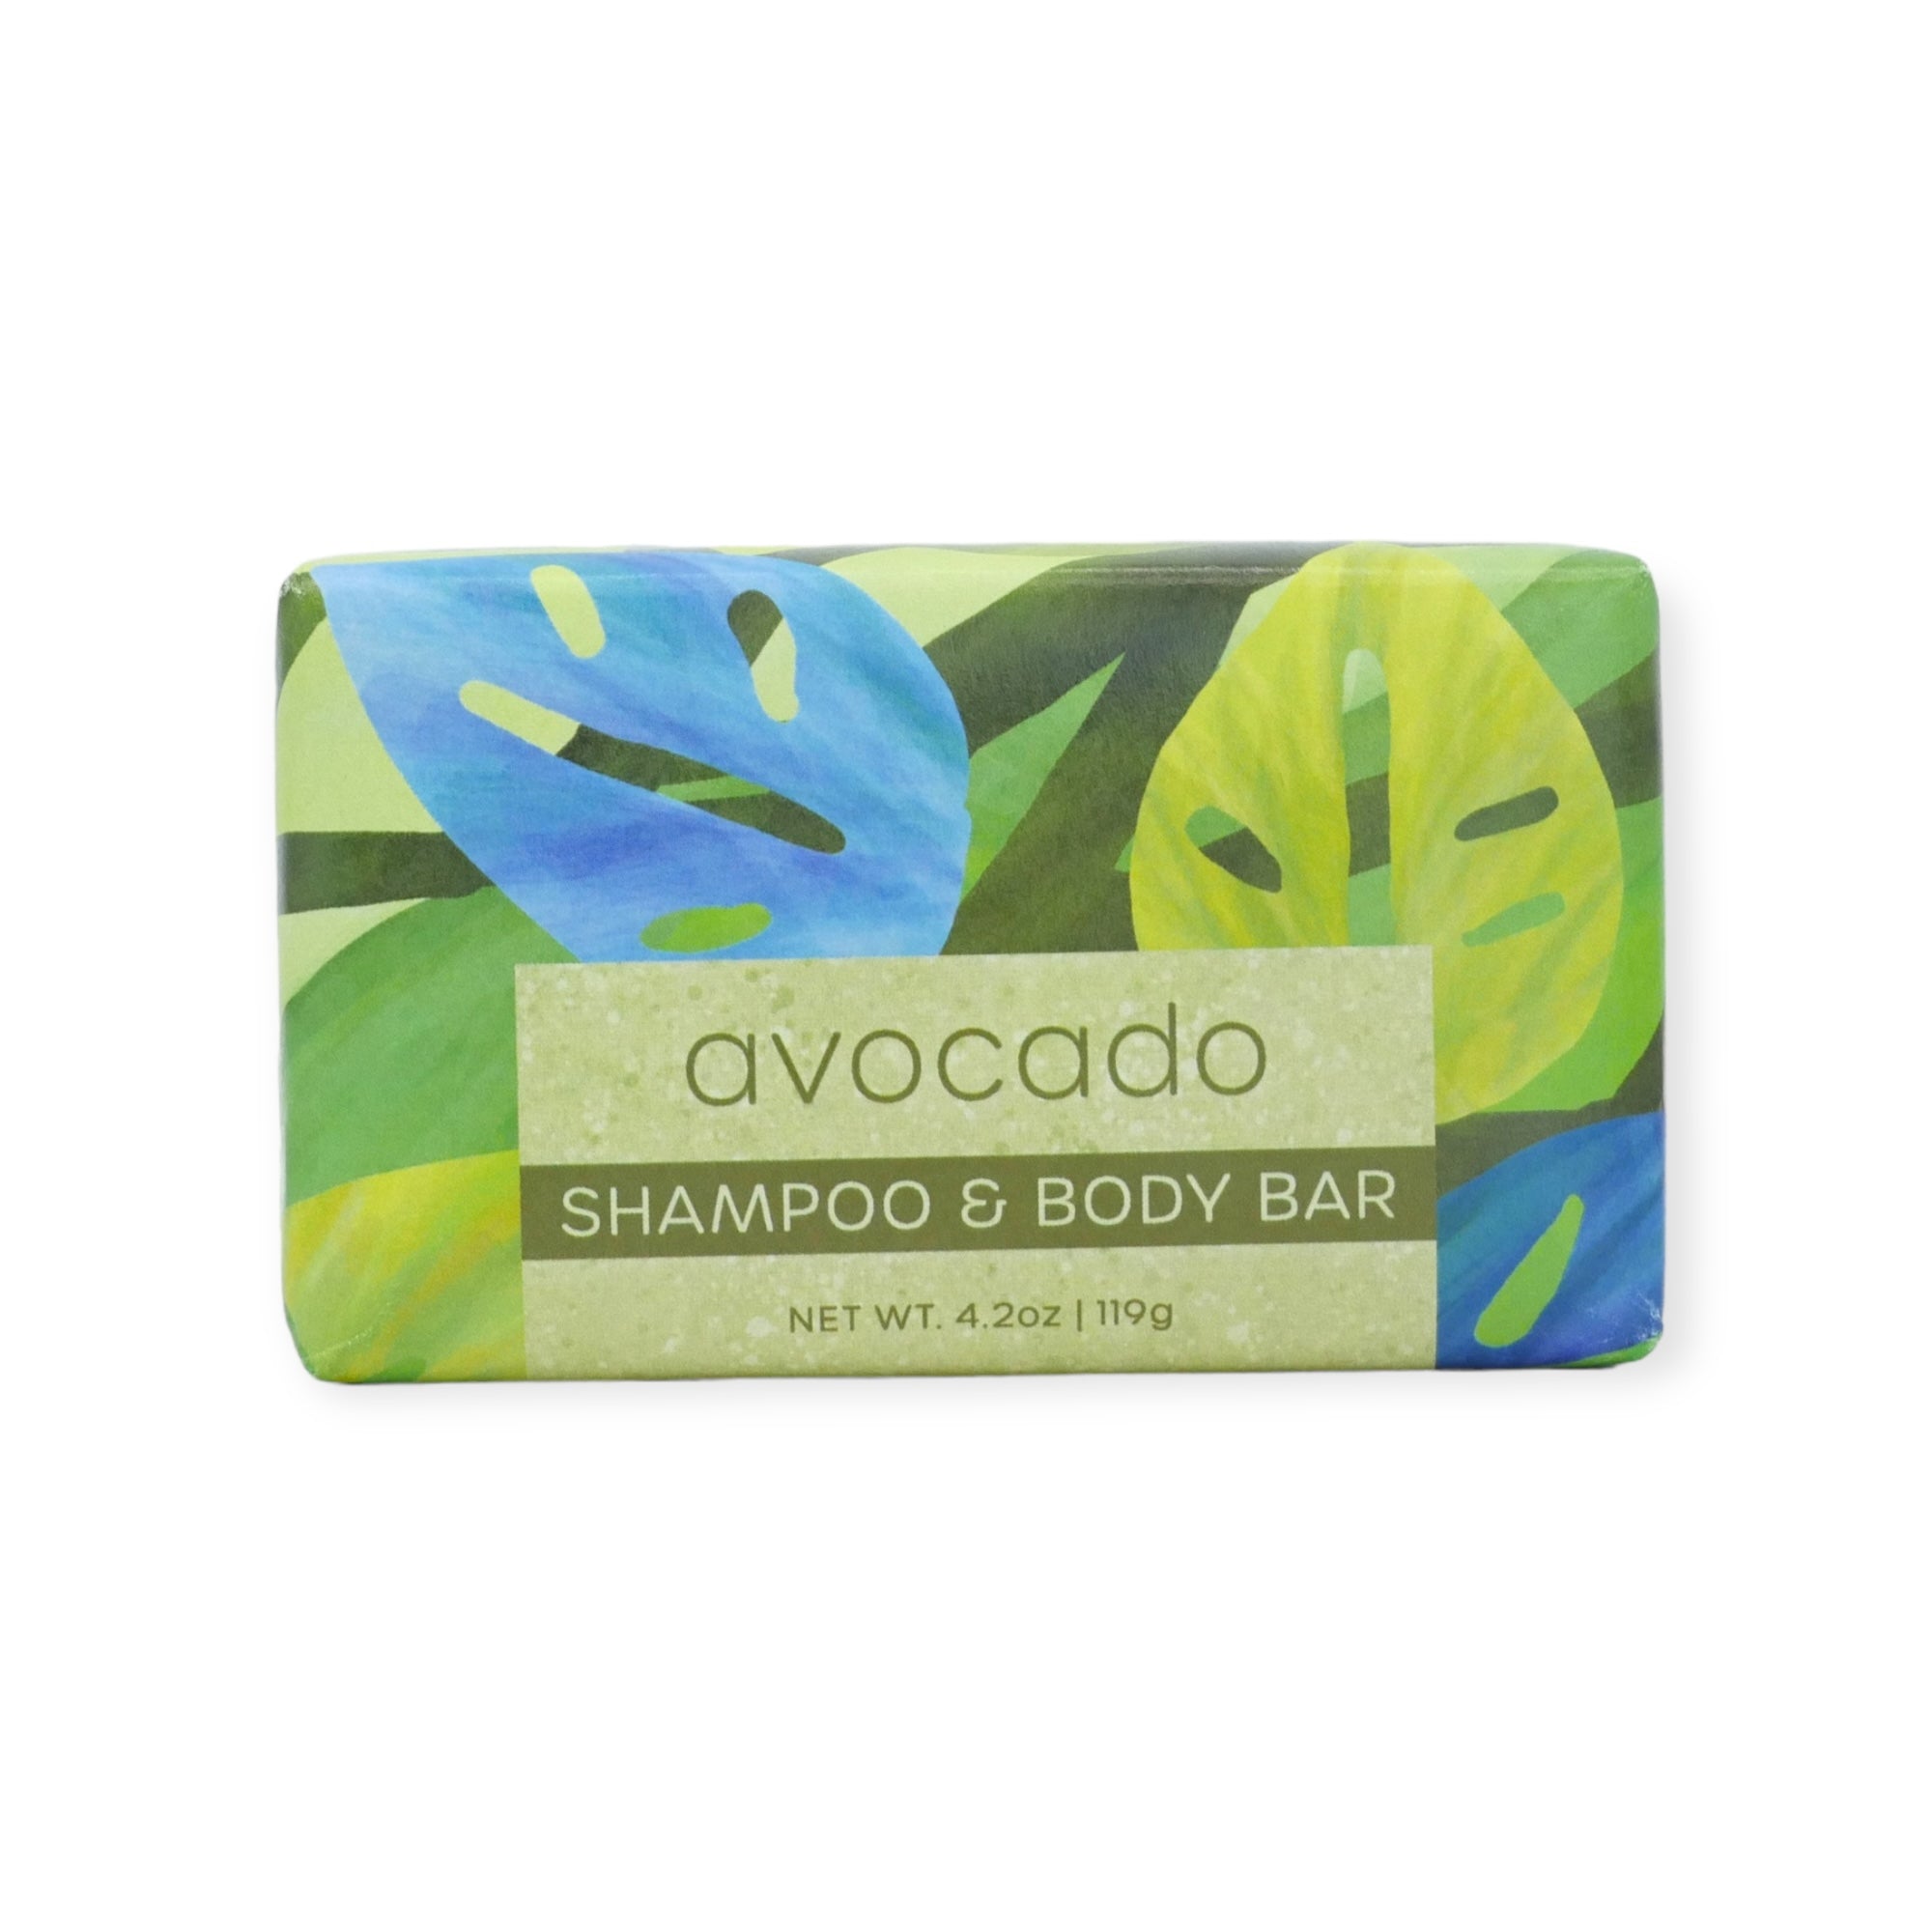 Avocado Shampoo & Body Bar by Greenwich Bay Trading Co.